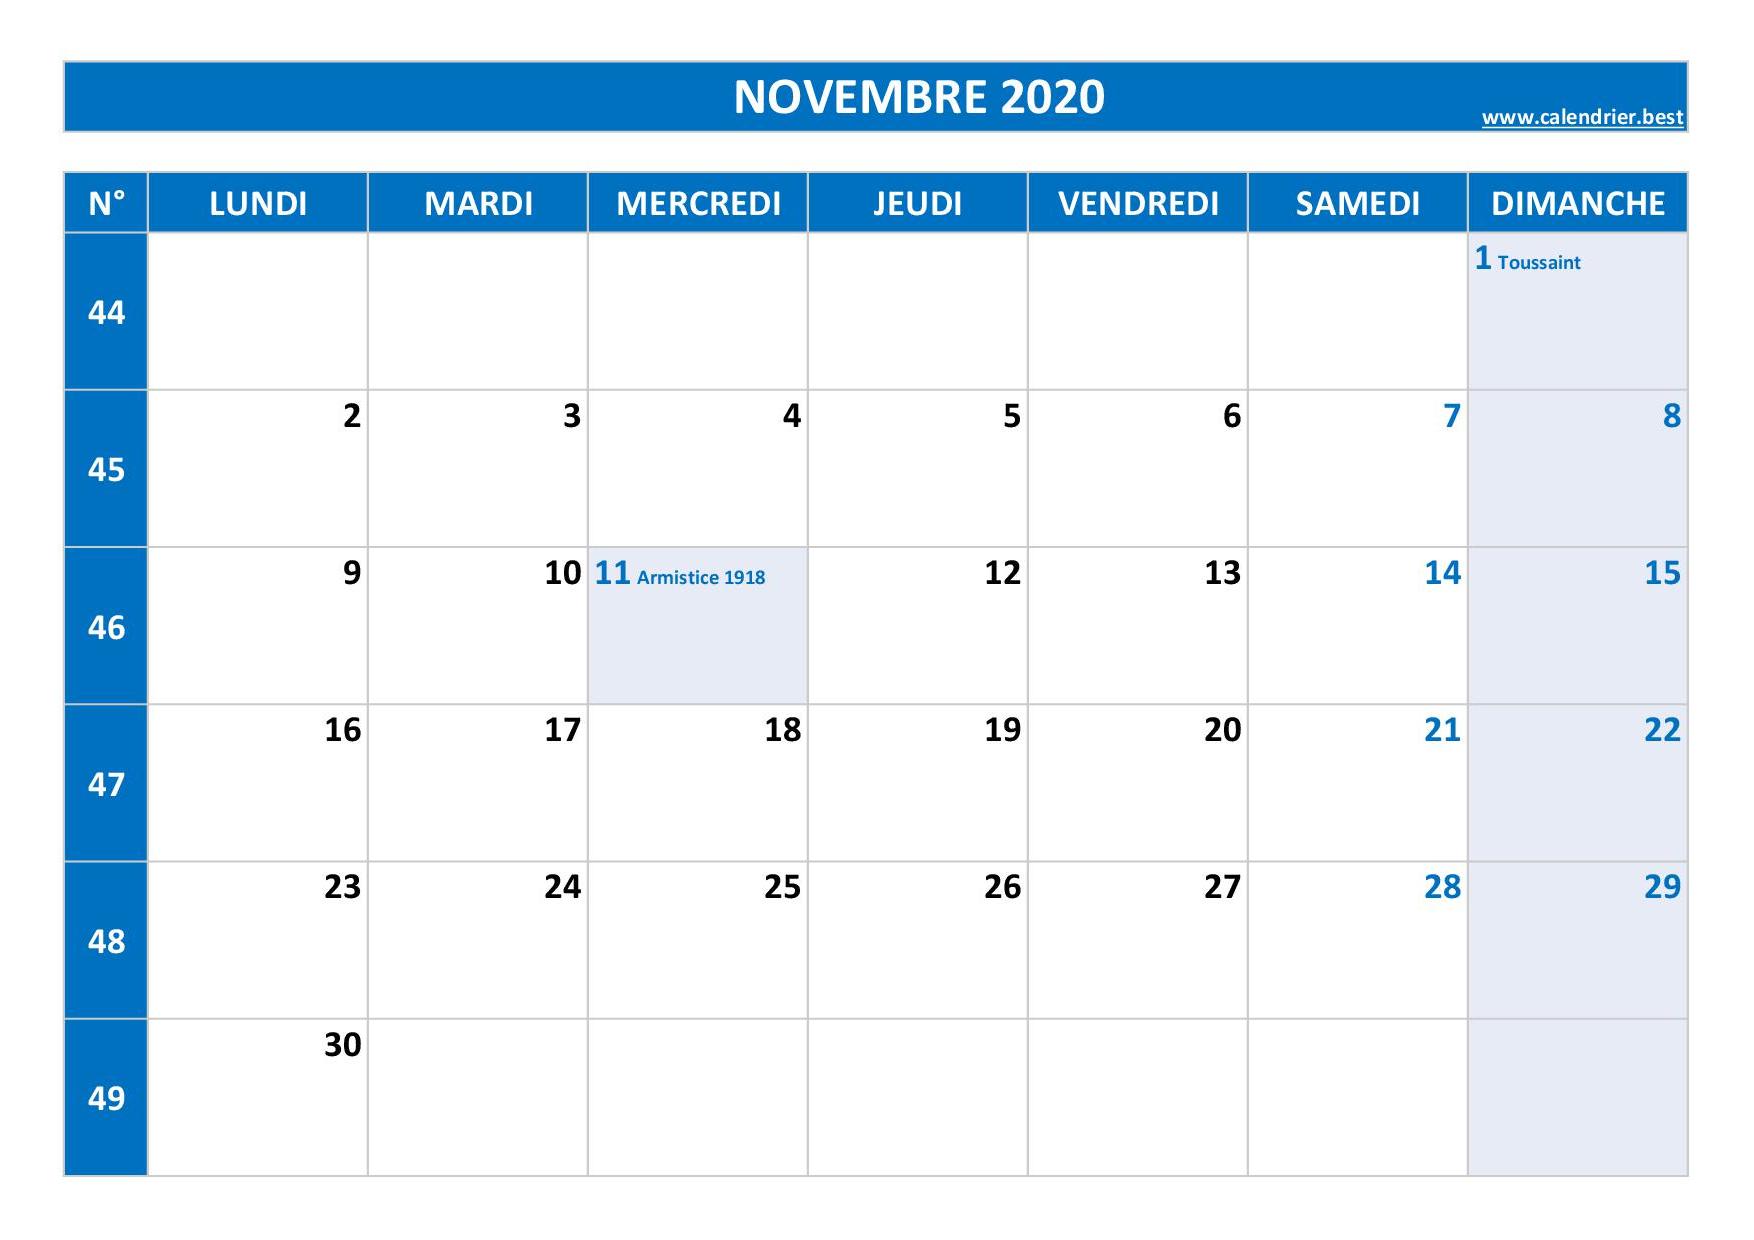 Calendrier Novembre 2020 à consulter ou imprimer -Calendrier.best